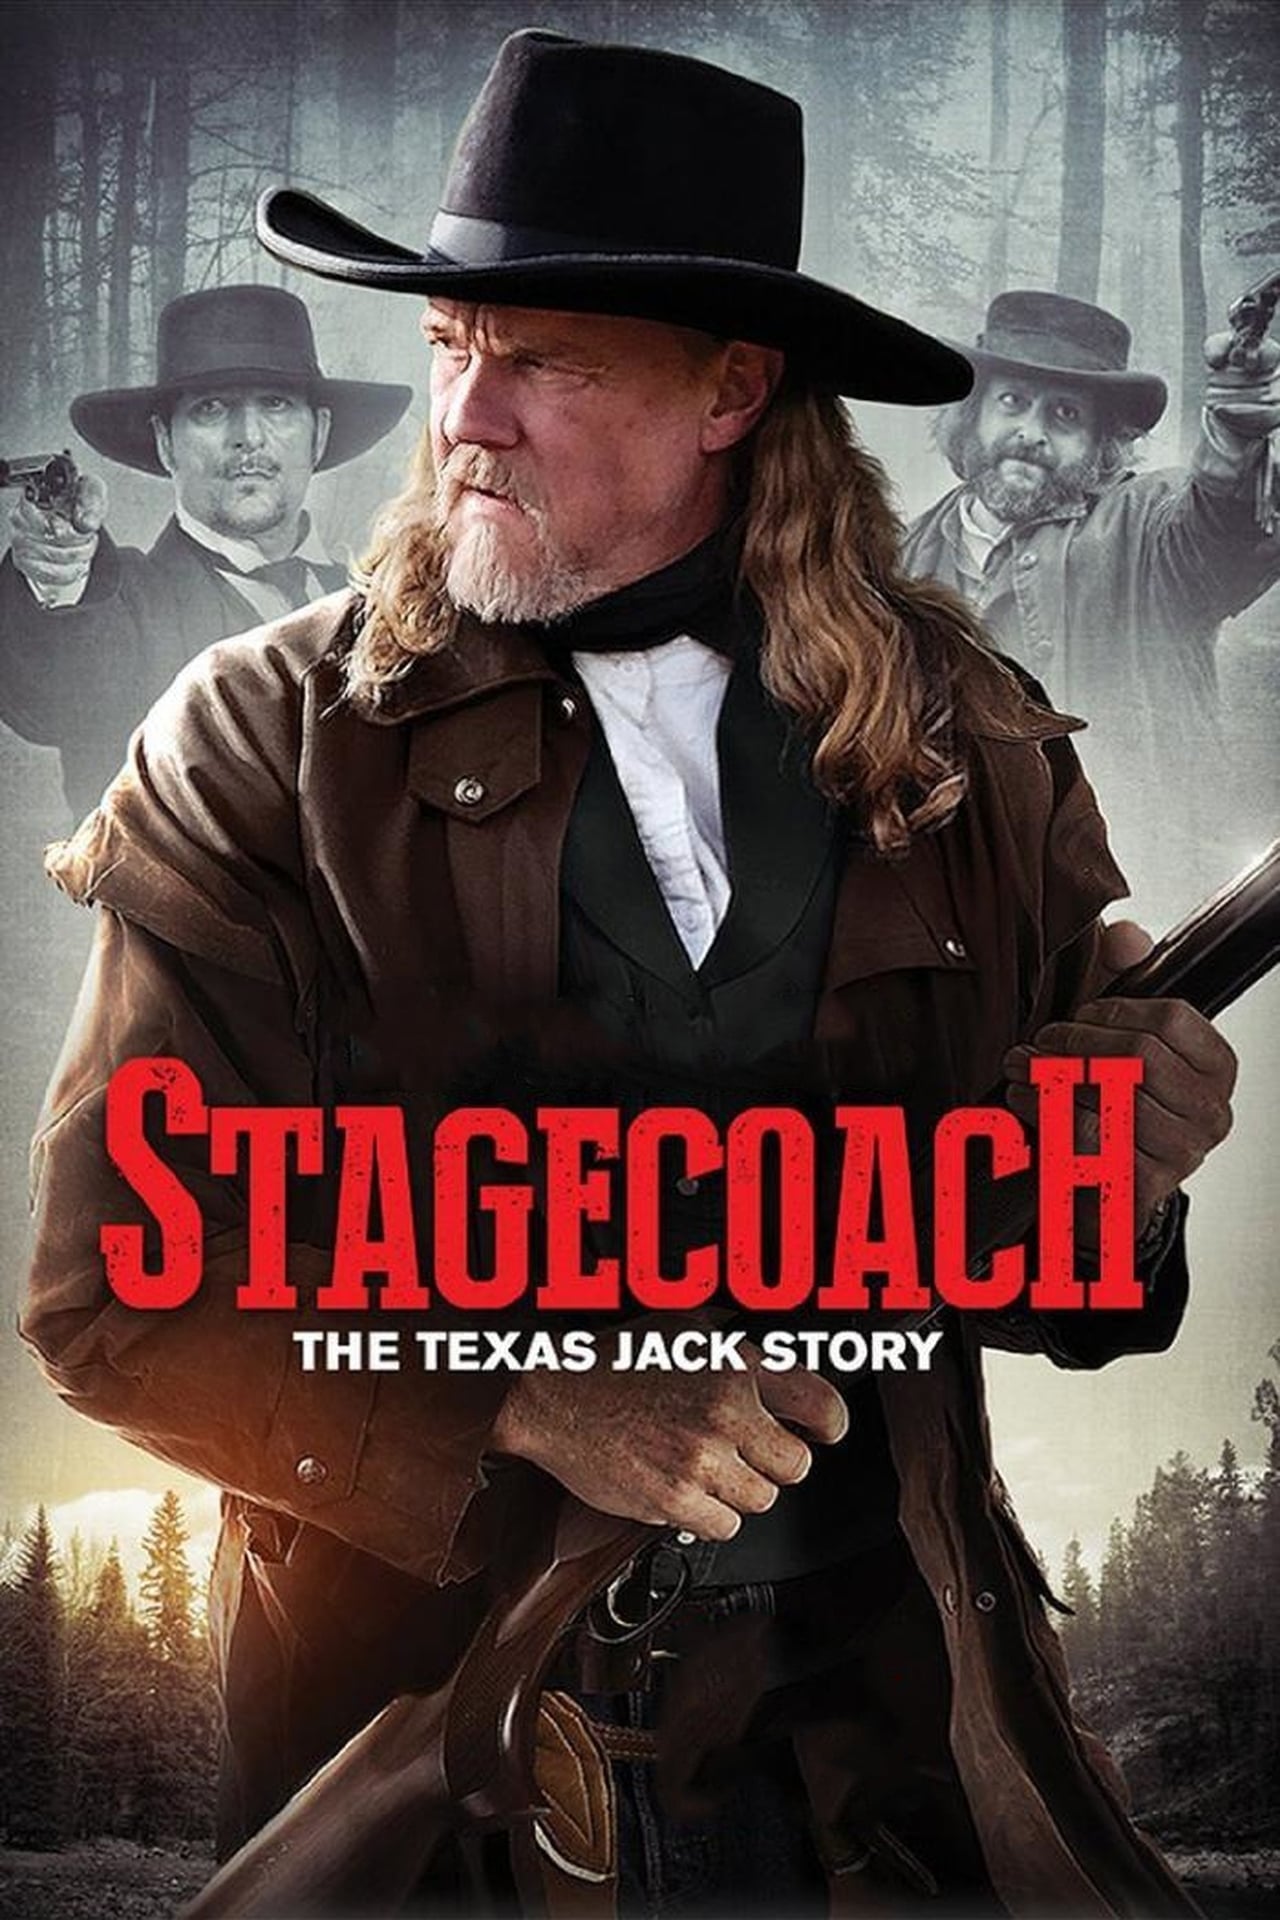 La diligencia: La historia de Texas Jack (2016)